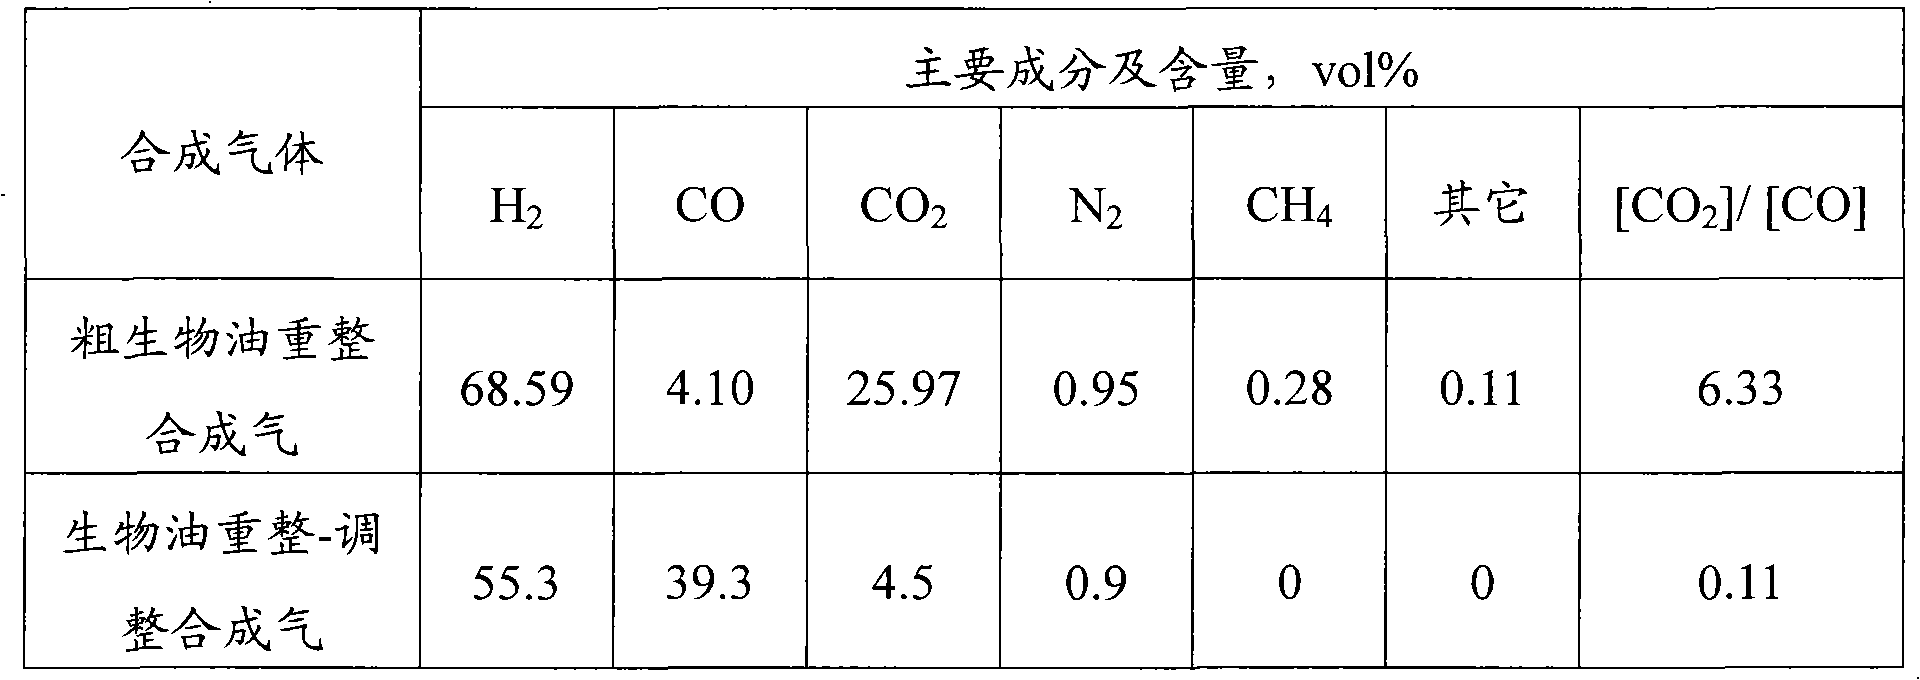 Method for preparing biomass-based methanol